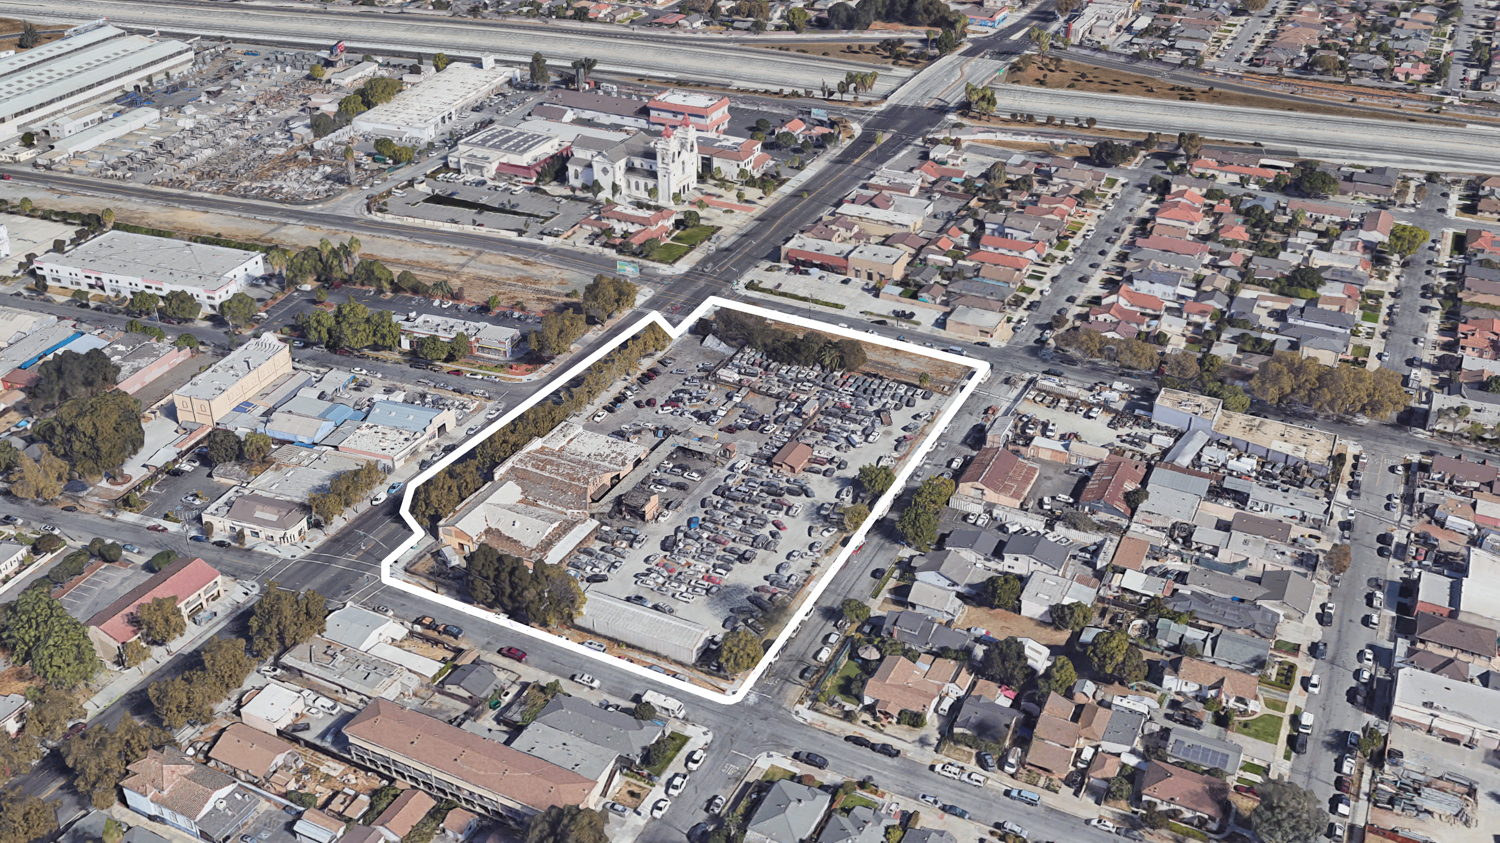 1260 East Santa Clara Street aerial view, image via Google Satellite